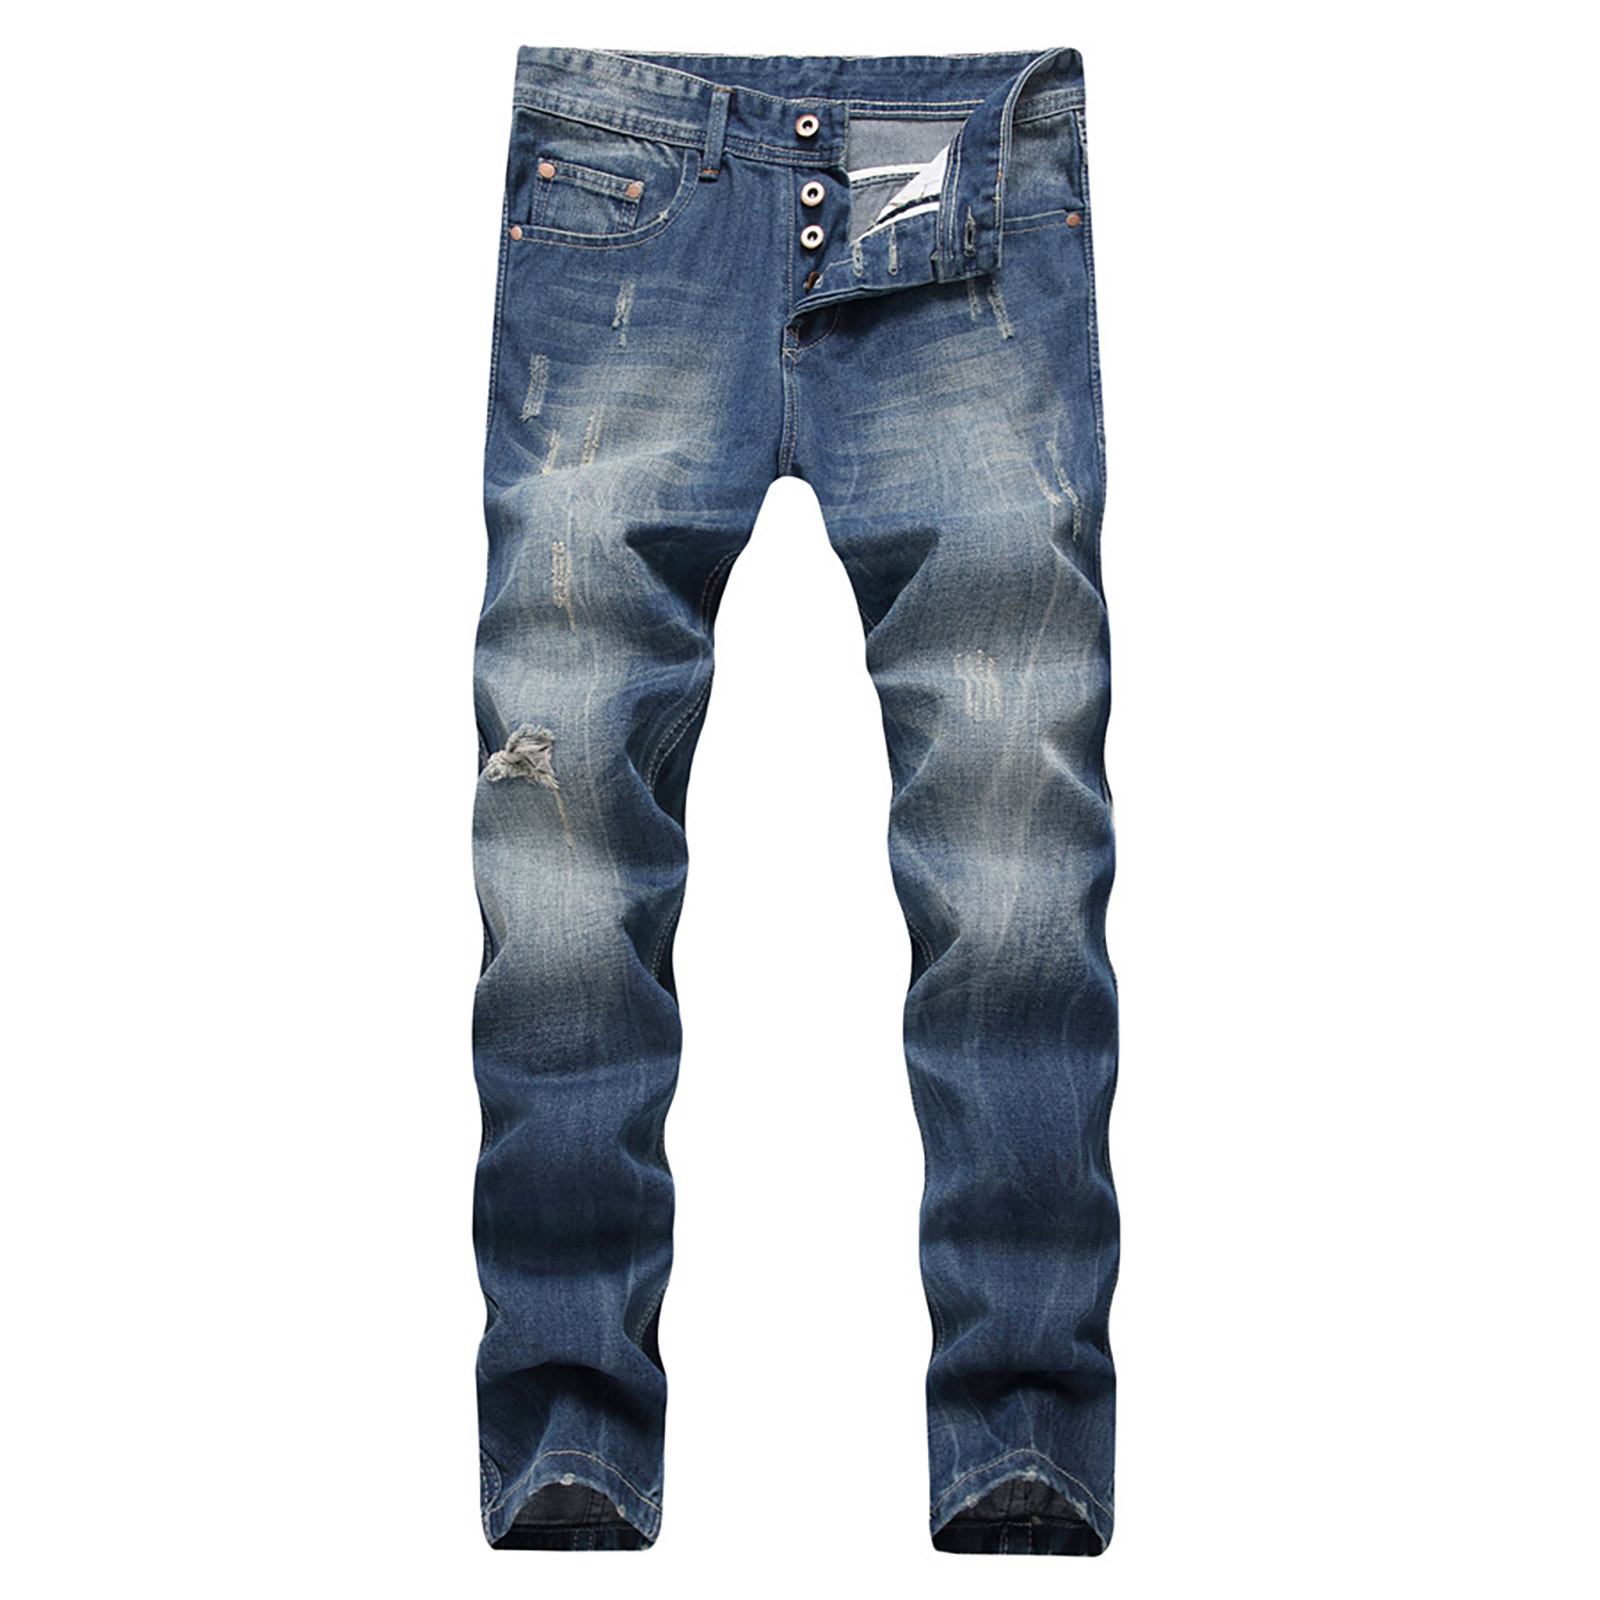 TKYCMSUAKI Men's Biker Jeans Trendy Ripped Distressed Jeans Cozy ...